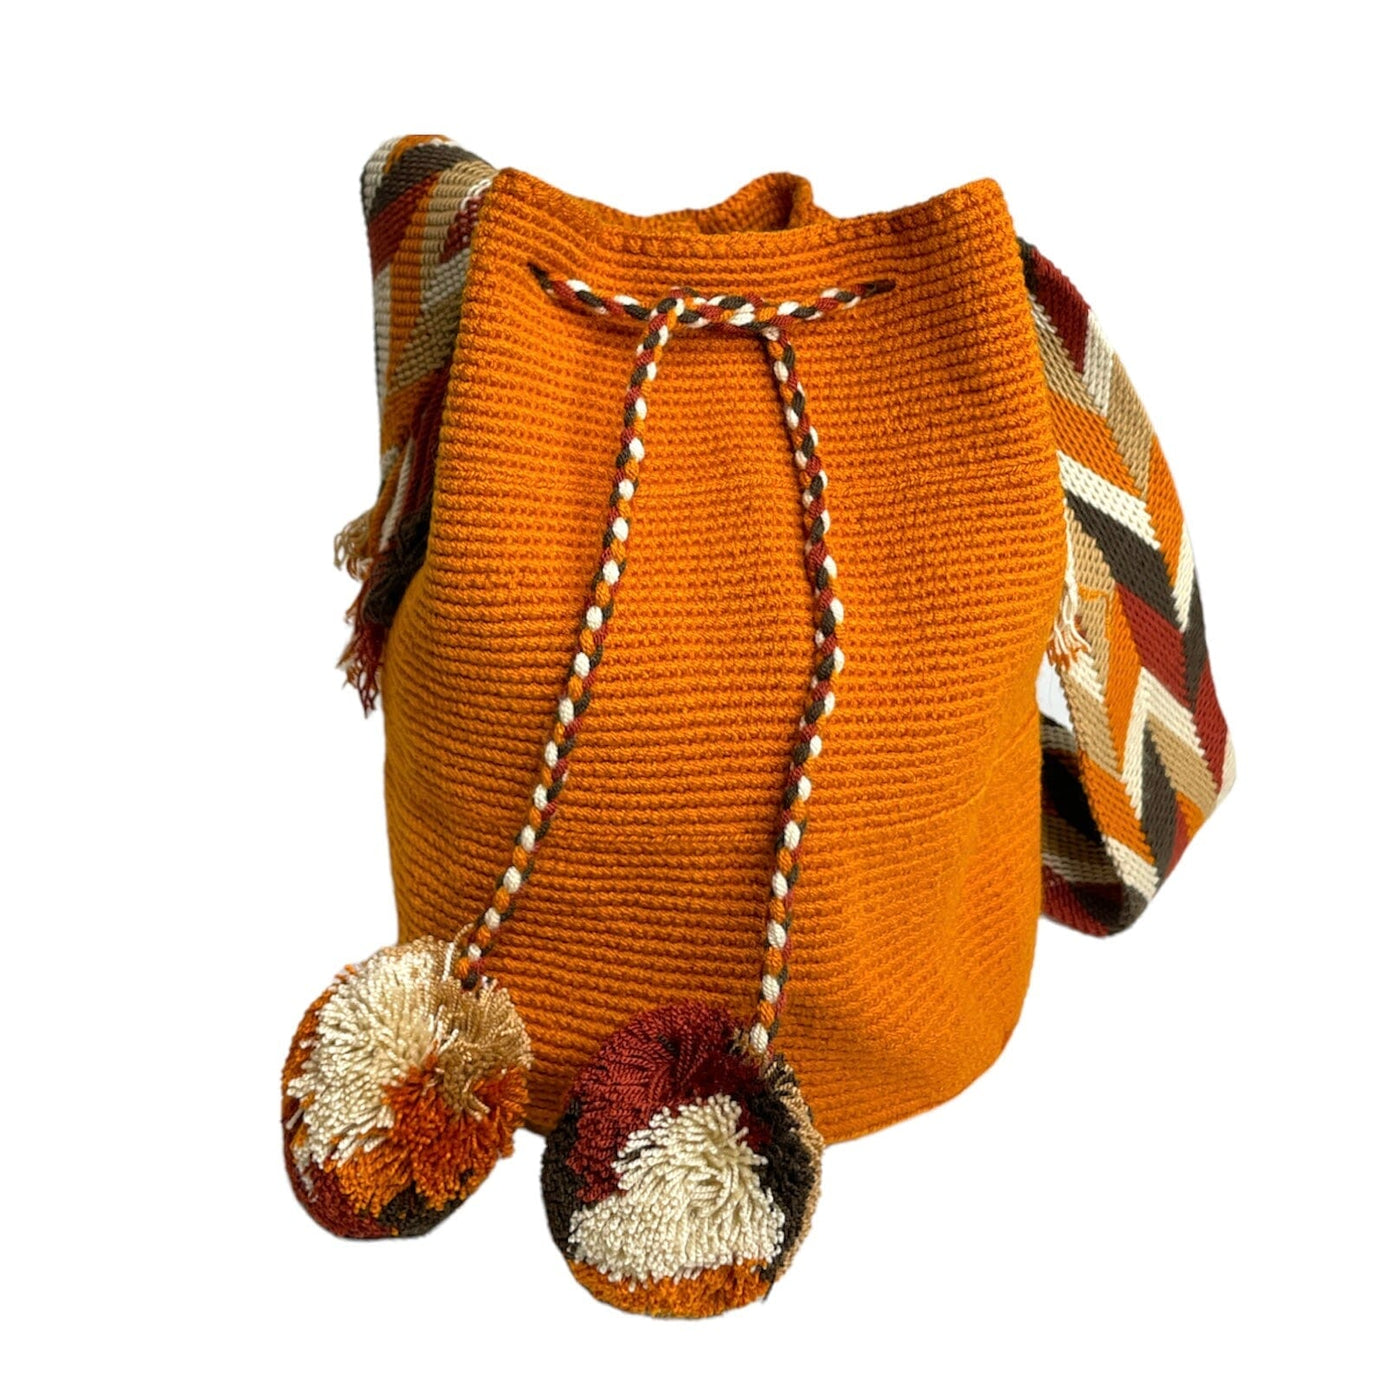 Solid Rust Orange Fall Bohemian Bag | Crossbody Boho Purse for Fall | Neutral Fall Tones Handbag | Colorful 4U